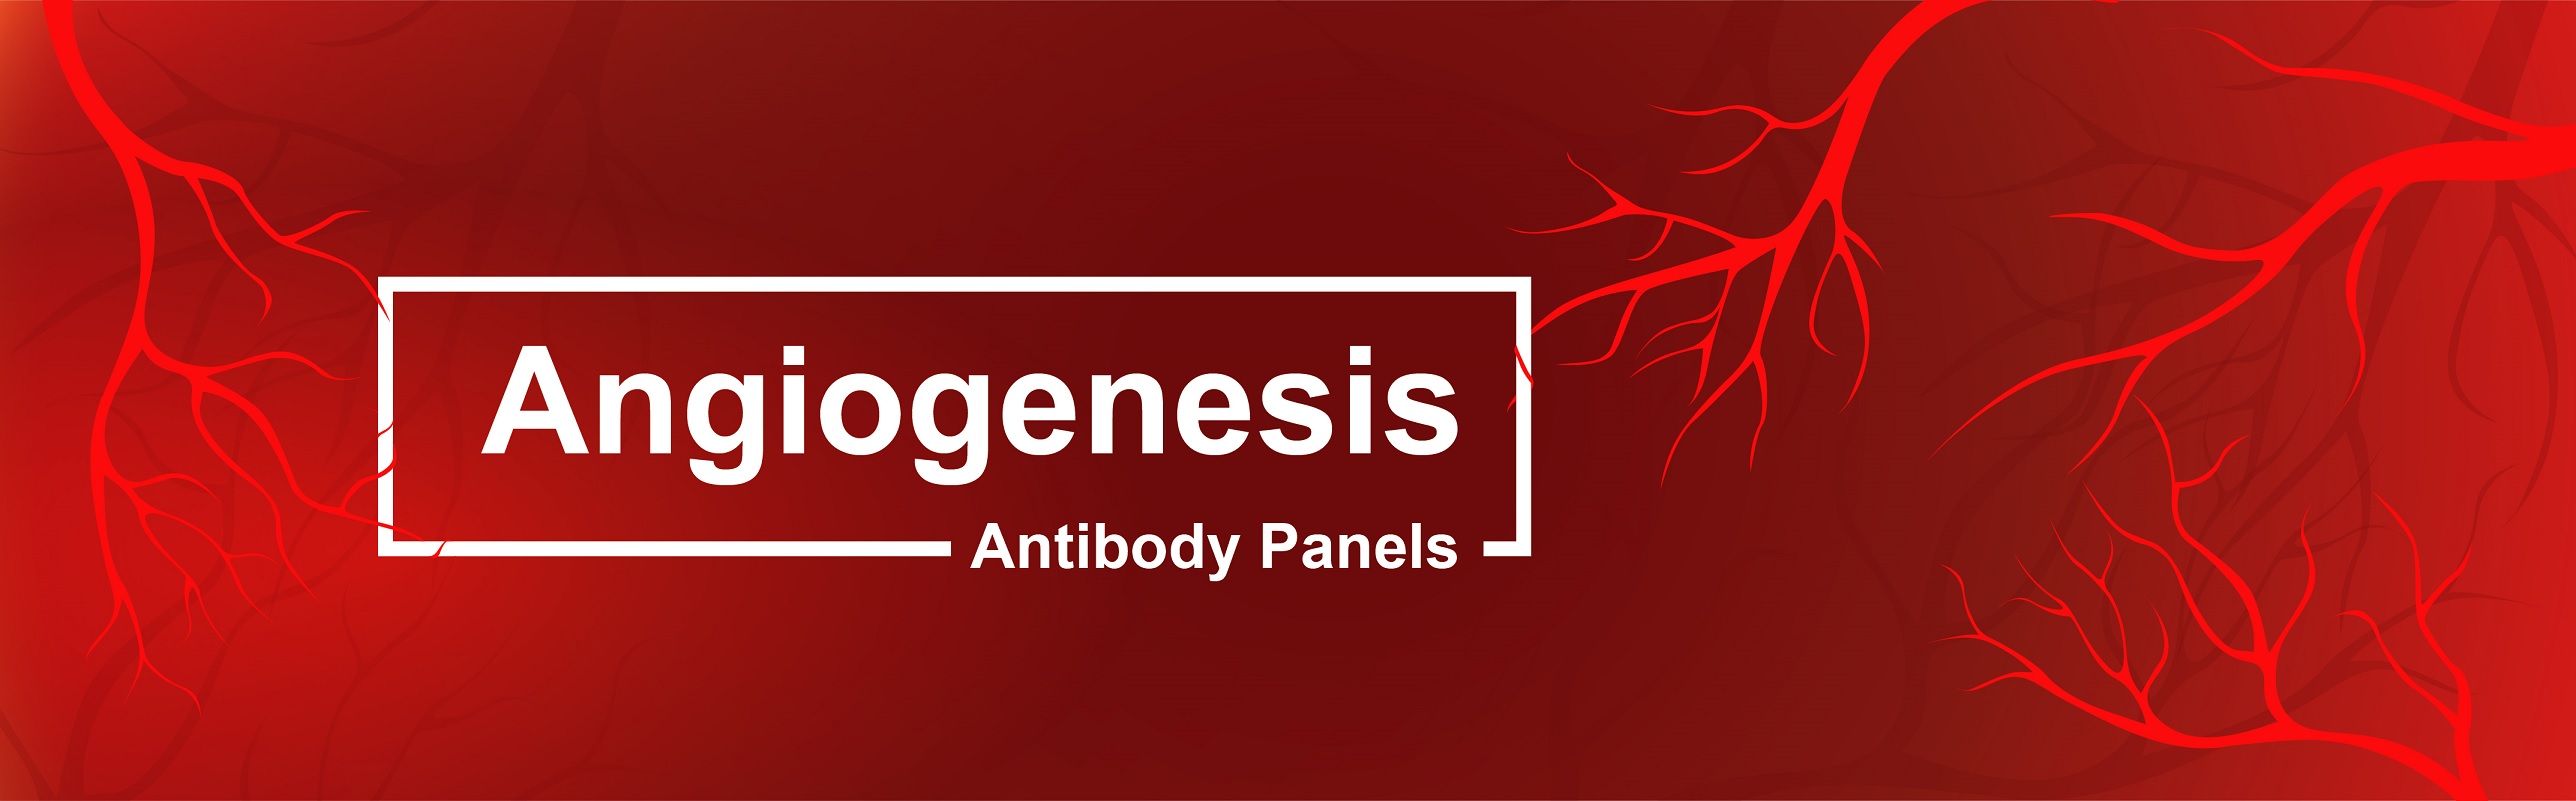 Angiogenesisタイトル